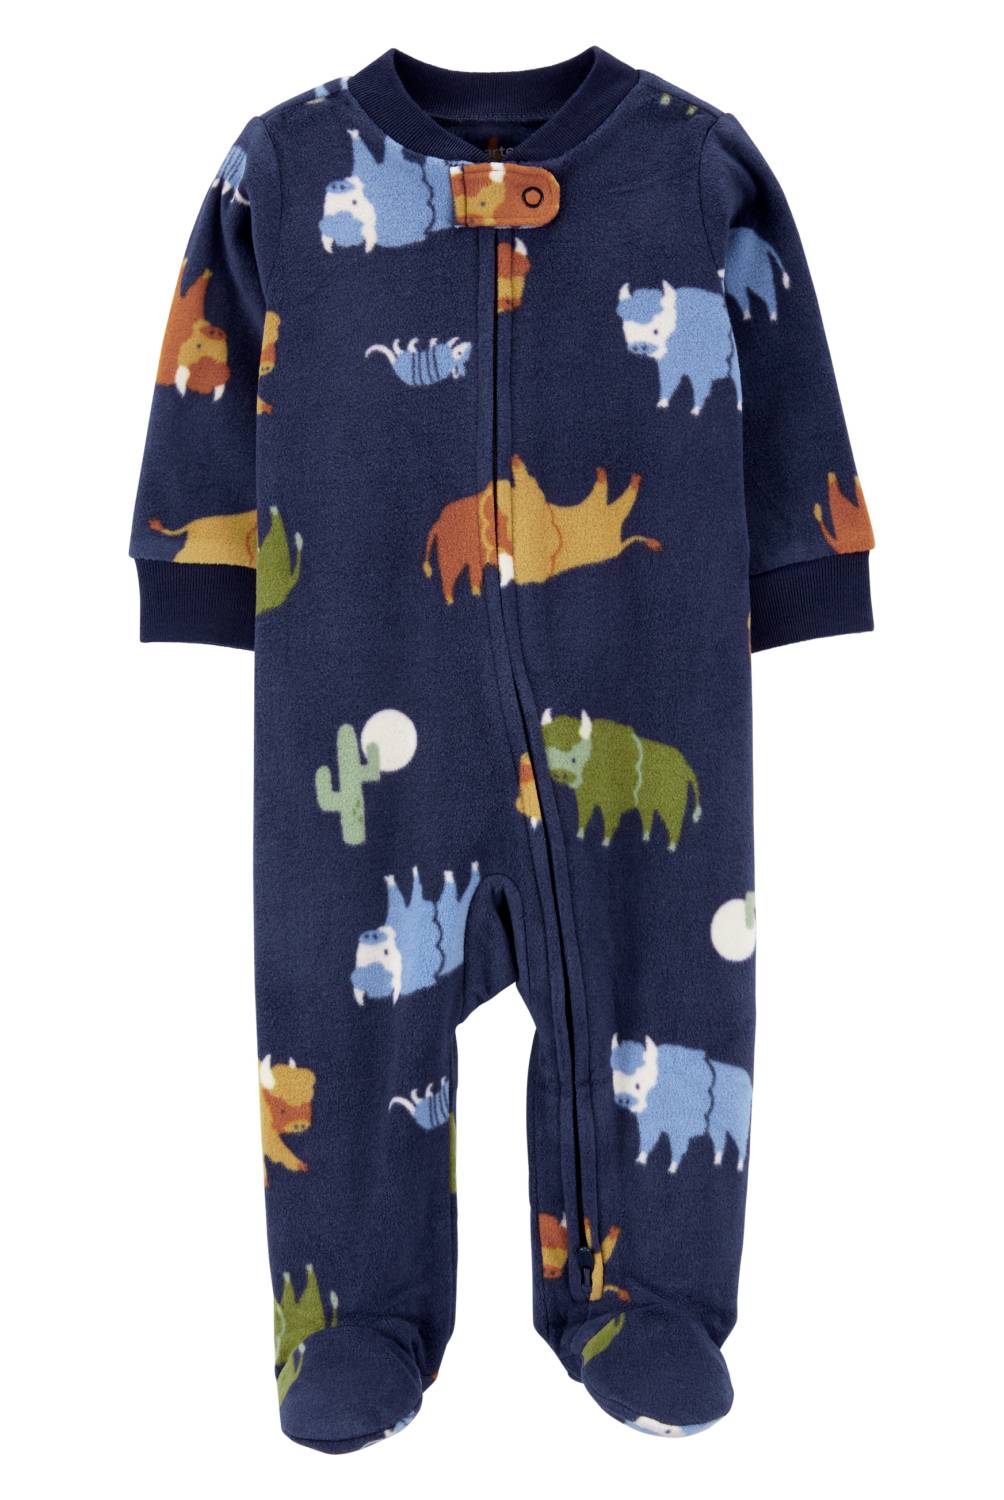 Pijama Polar Flanel Niño Bebé 2a-3a Baby Joe 7010